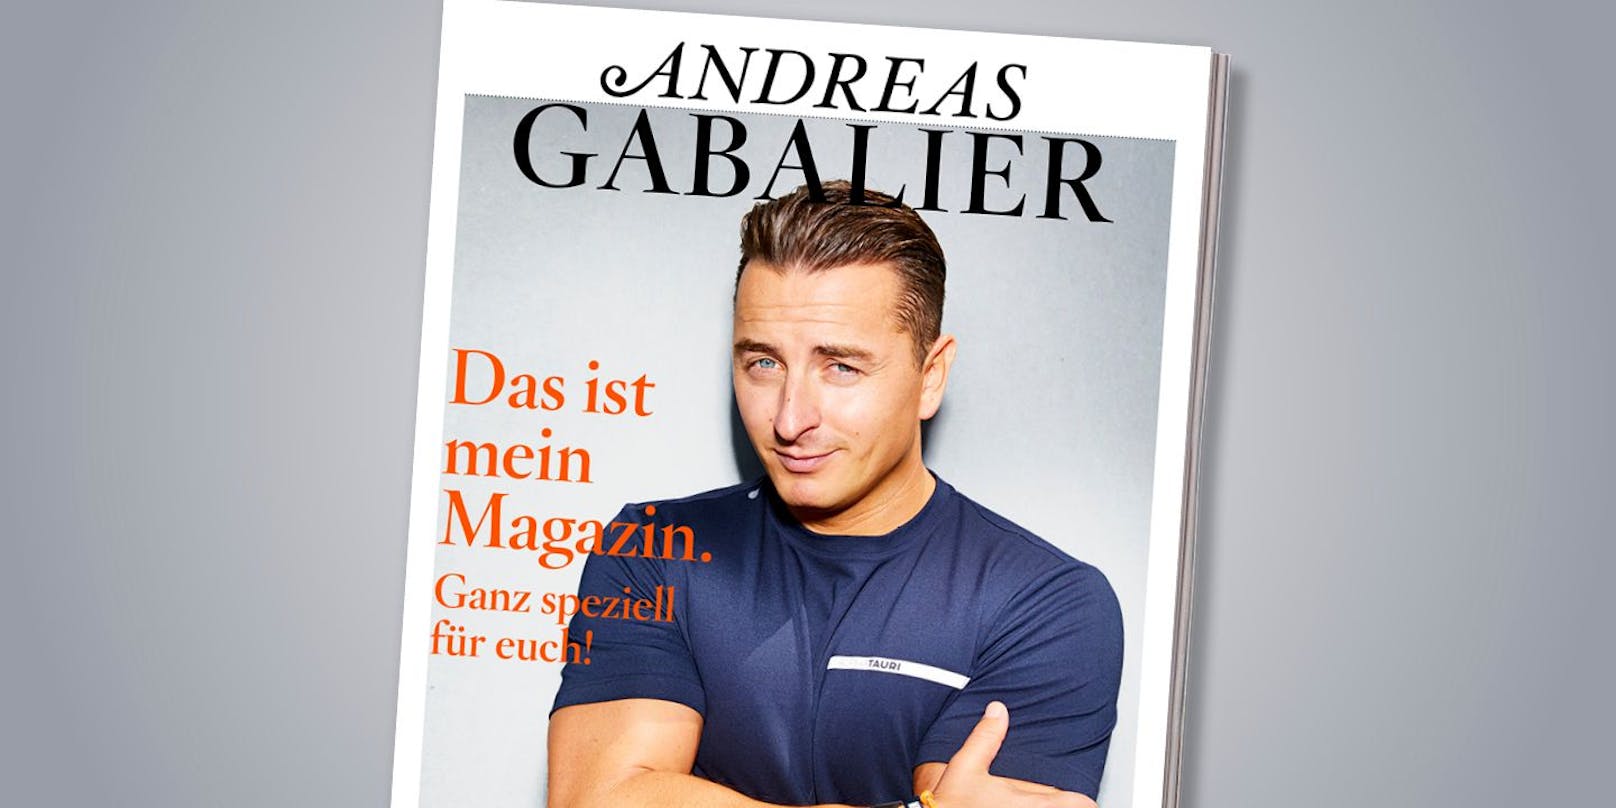 Andreas Gabalier wird Chefredakteur.